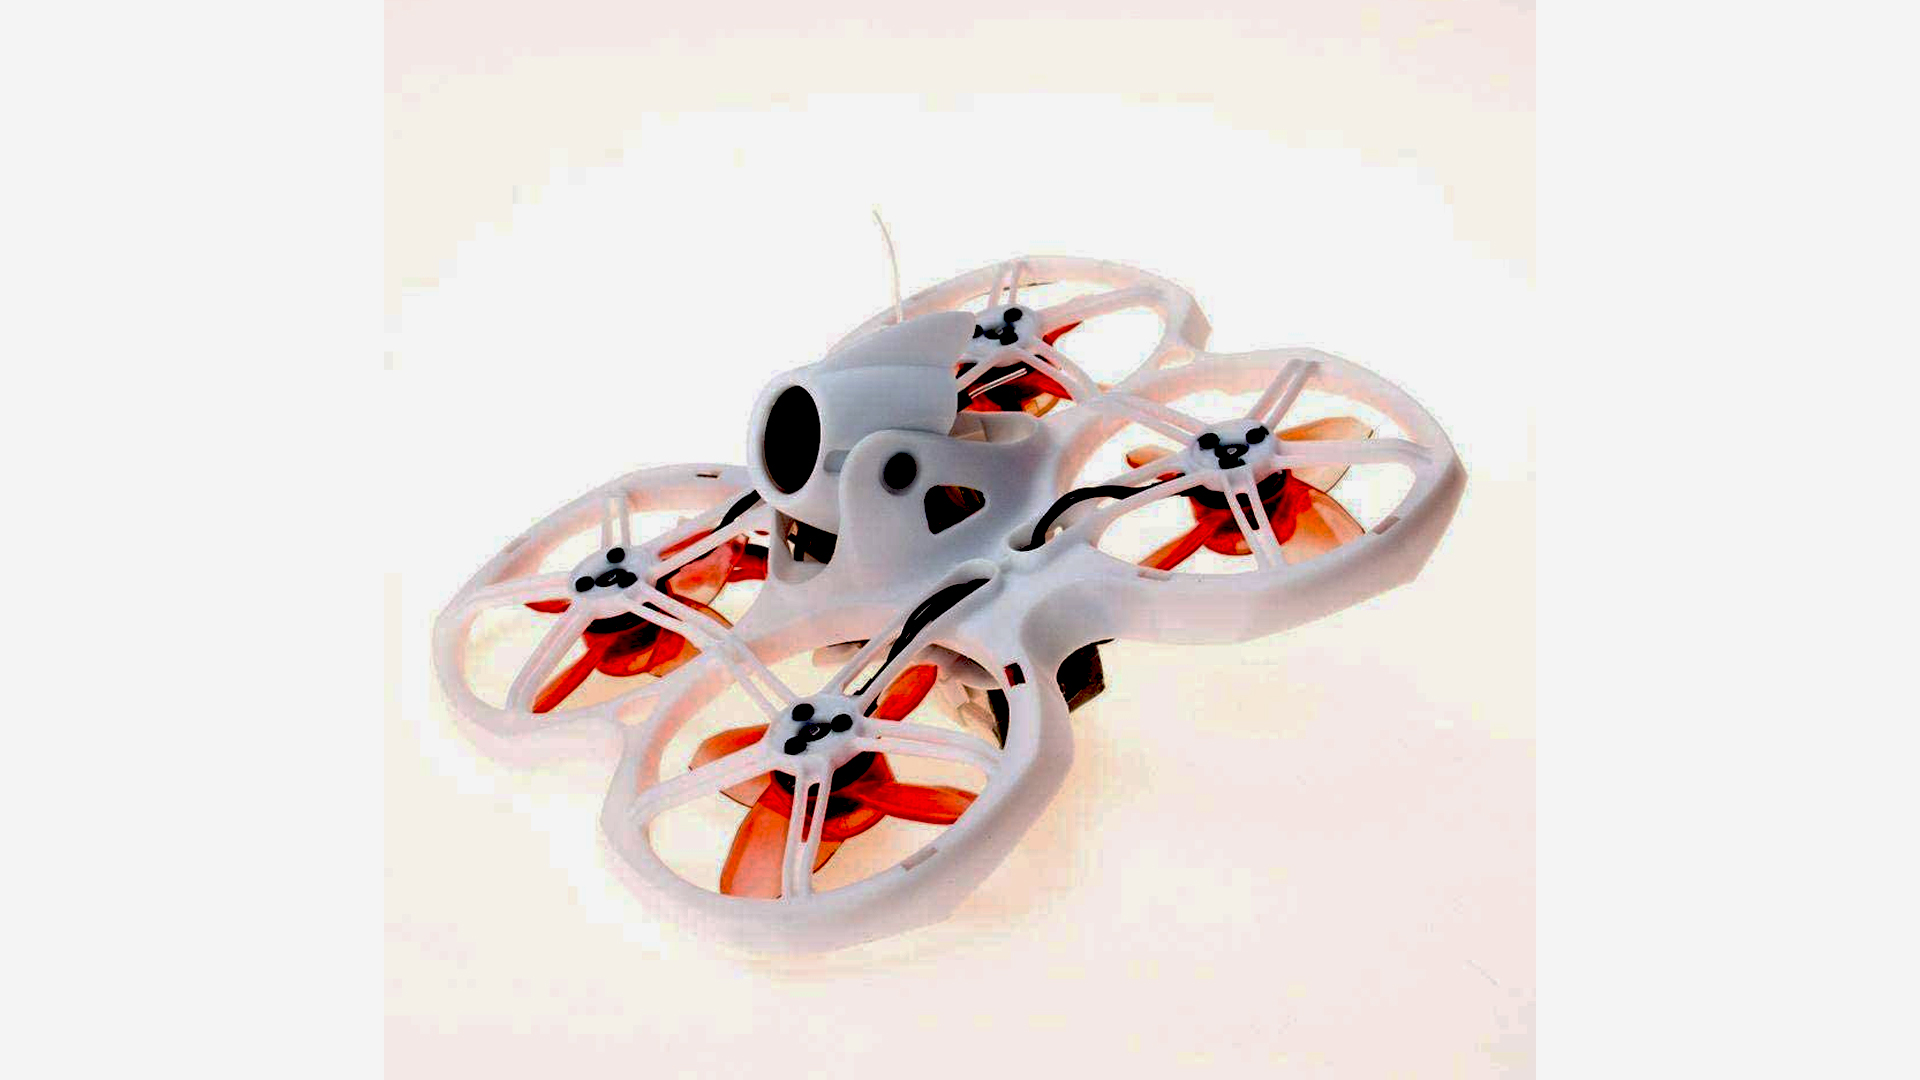 EMAX Tinyhawk2 drone